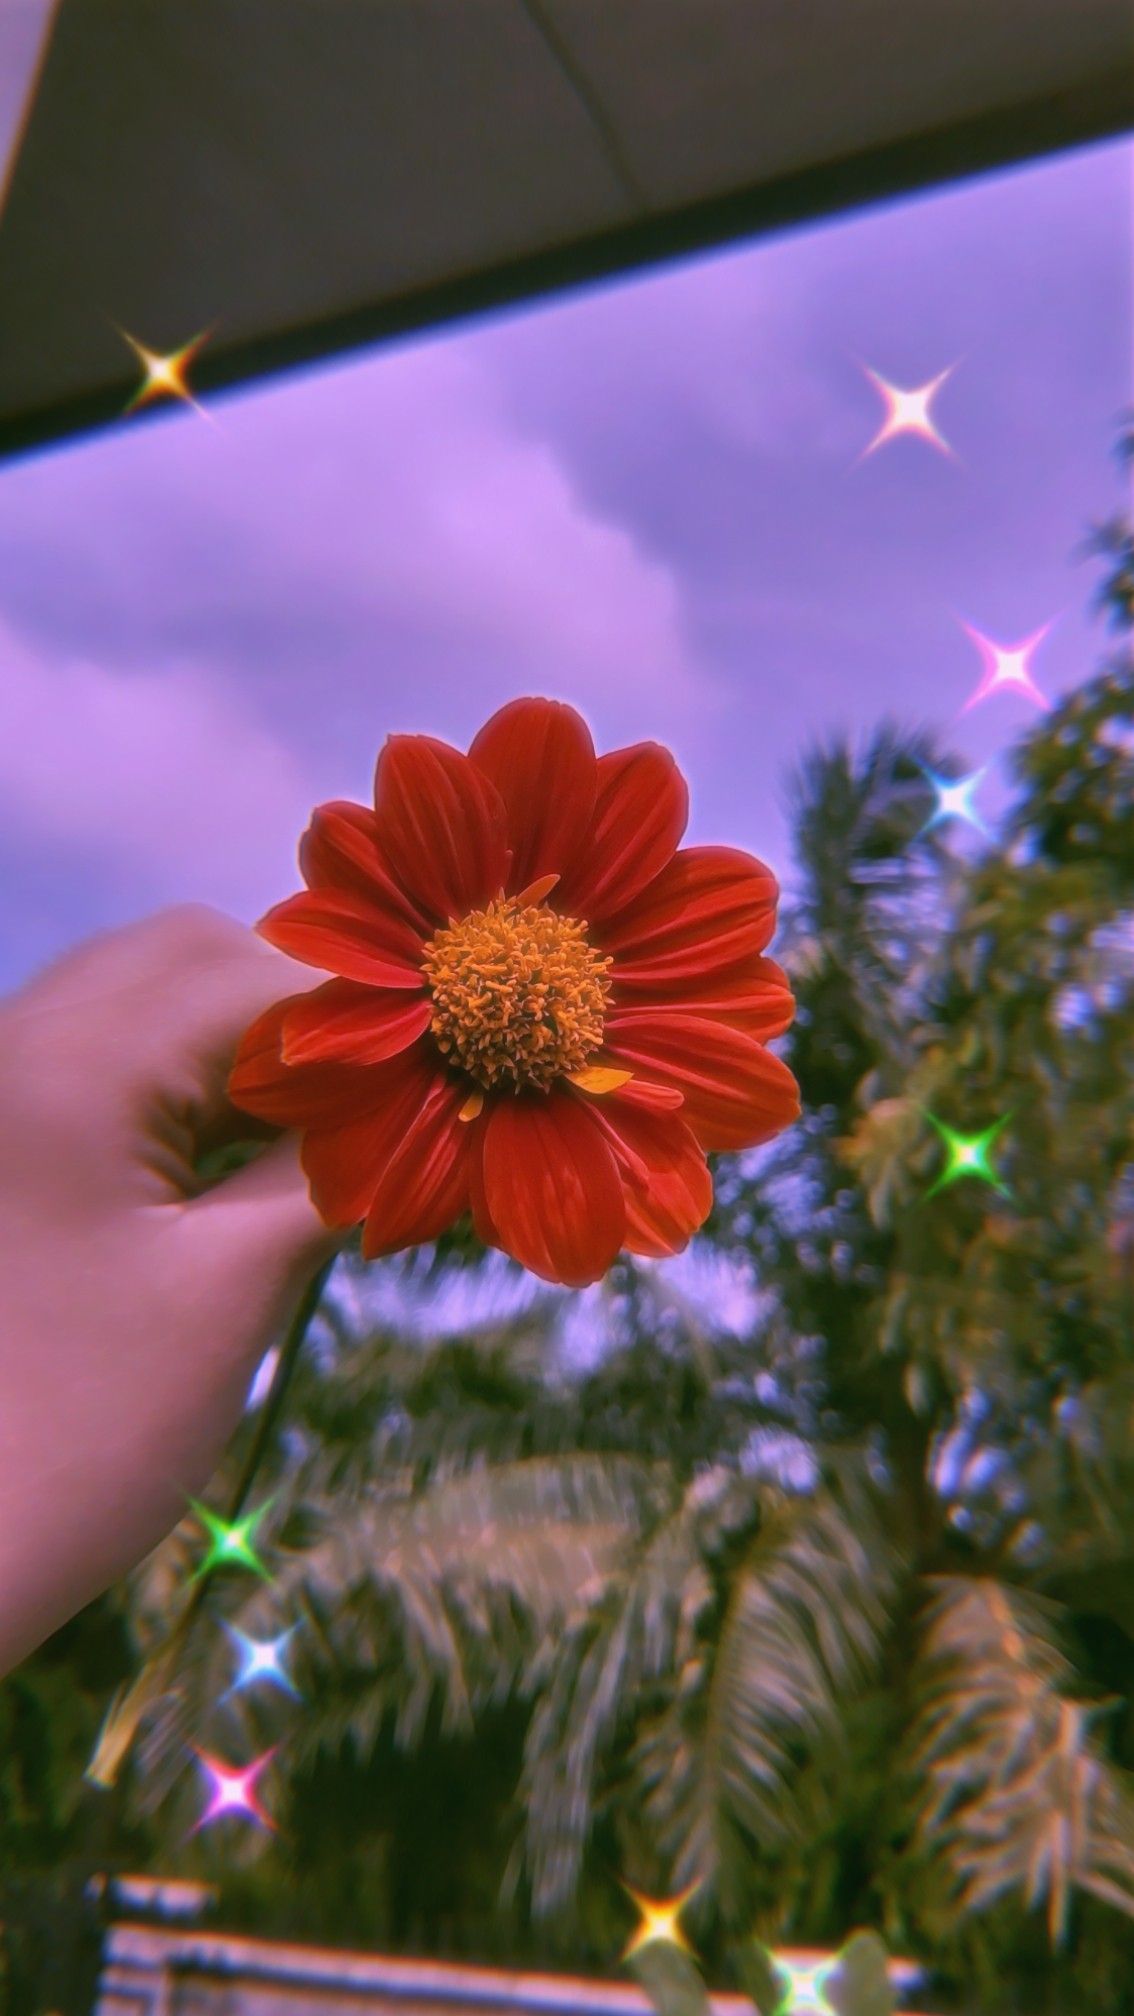 A hand holding up an orange flower - Flower, bling